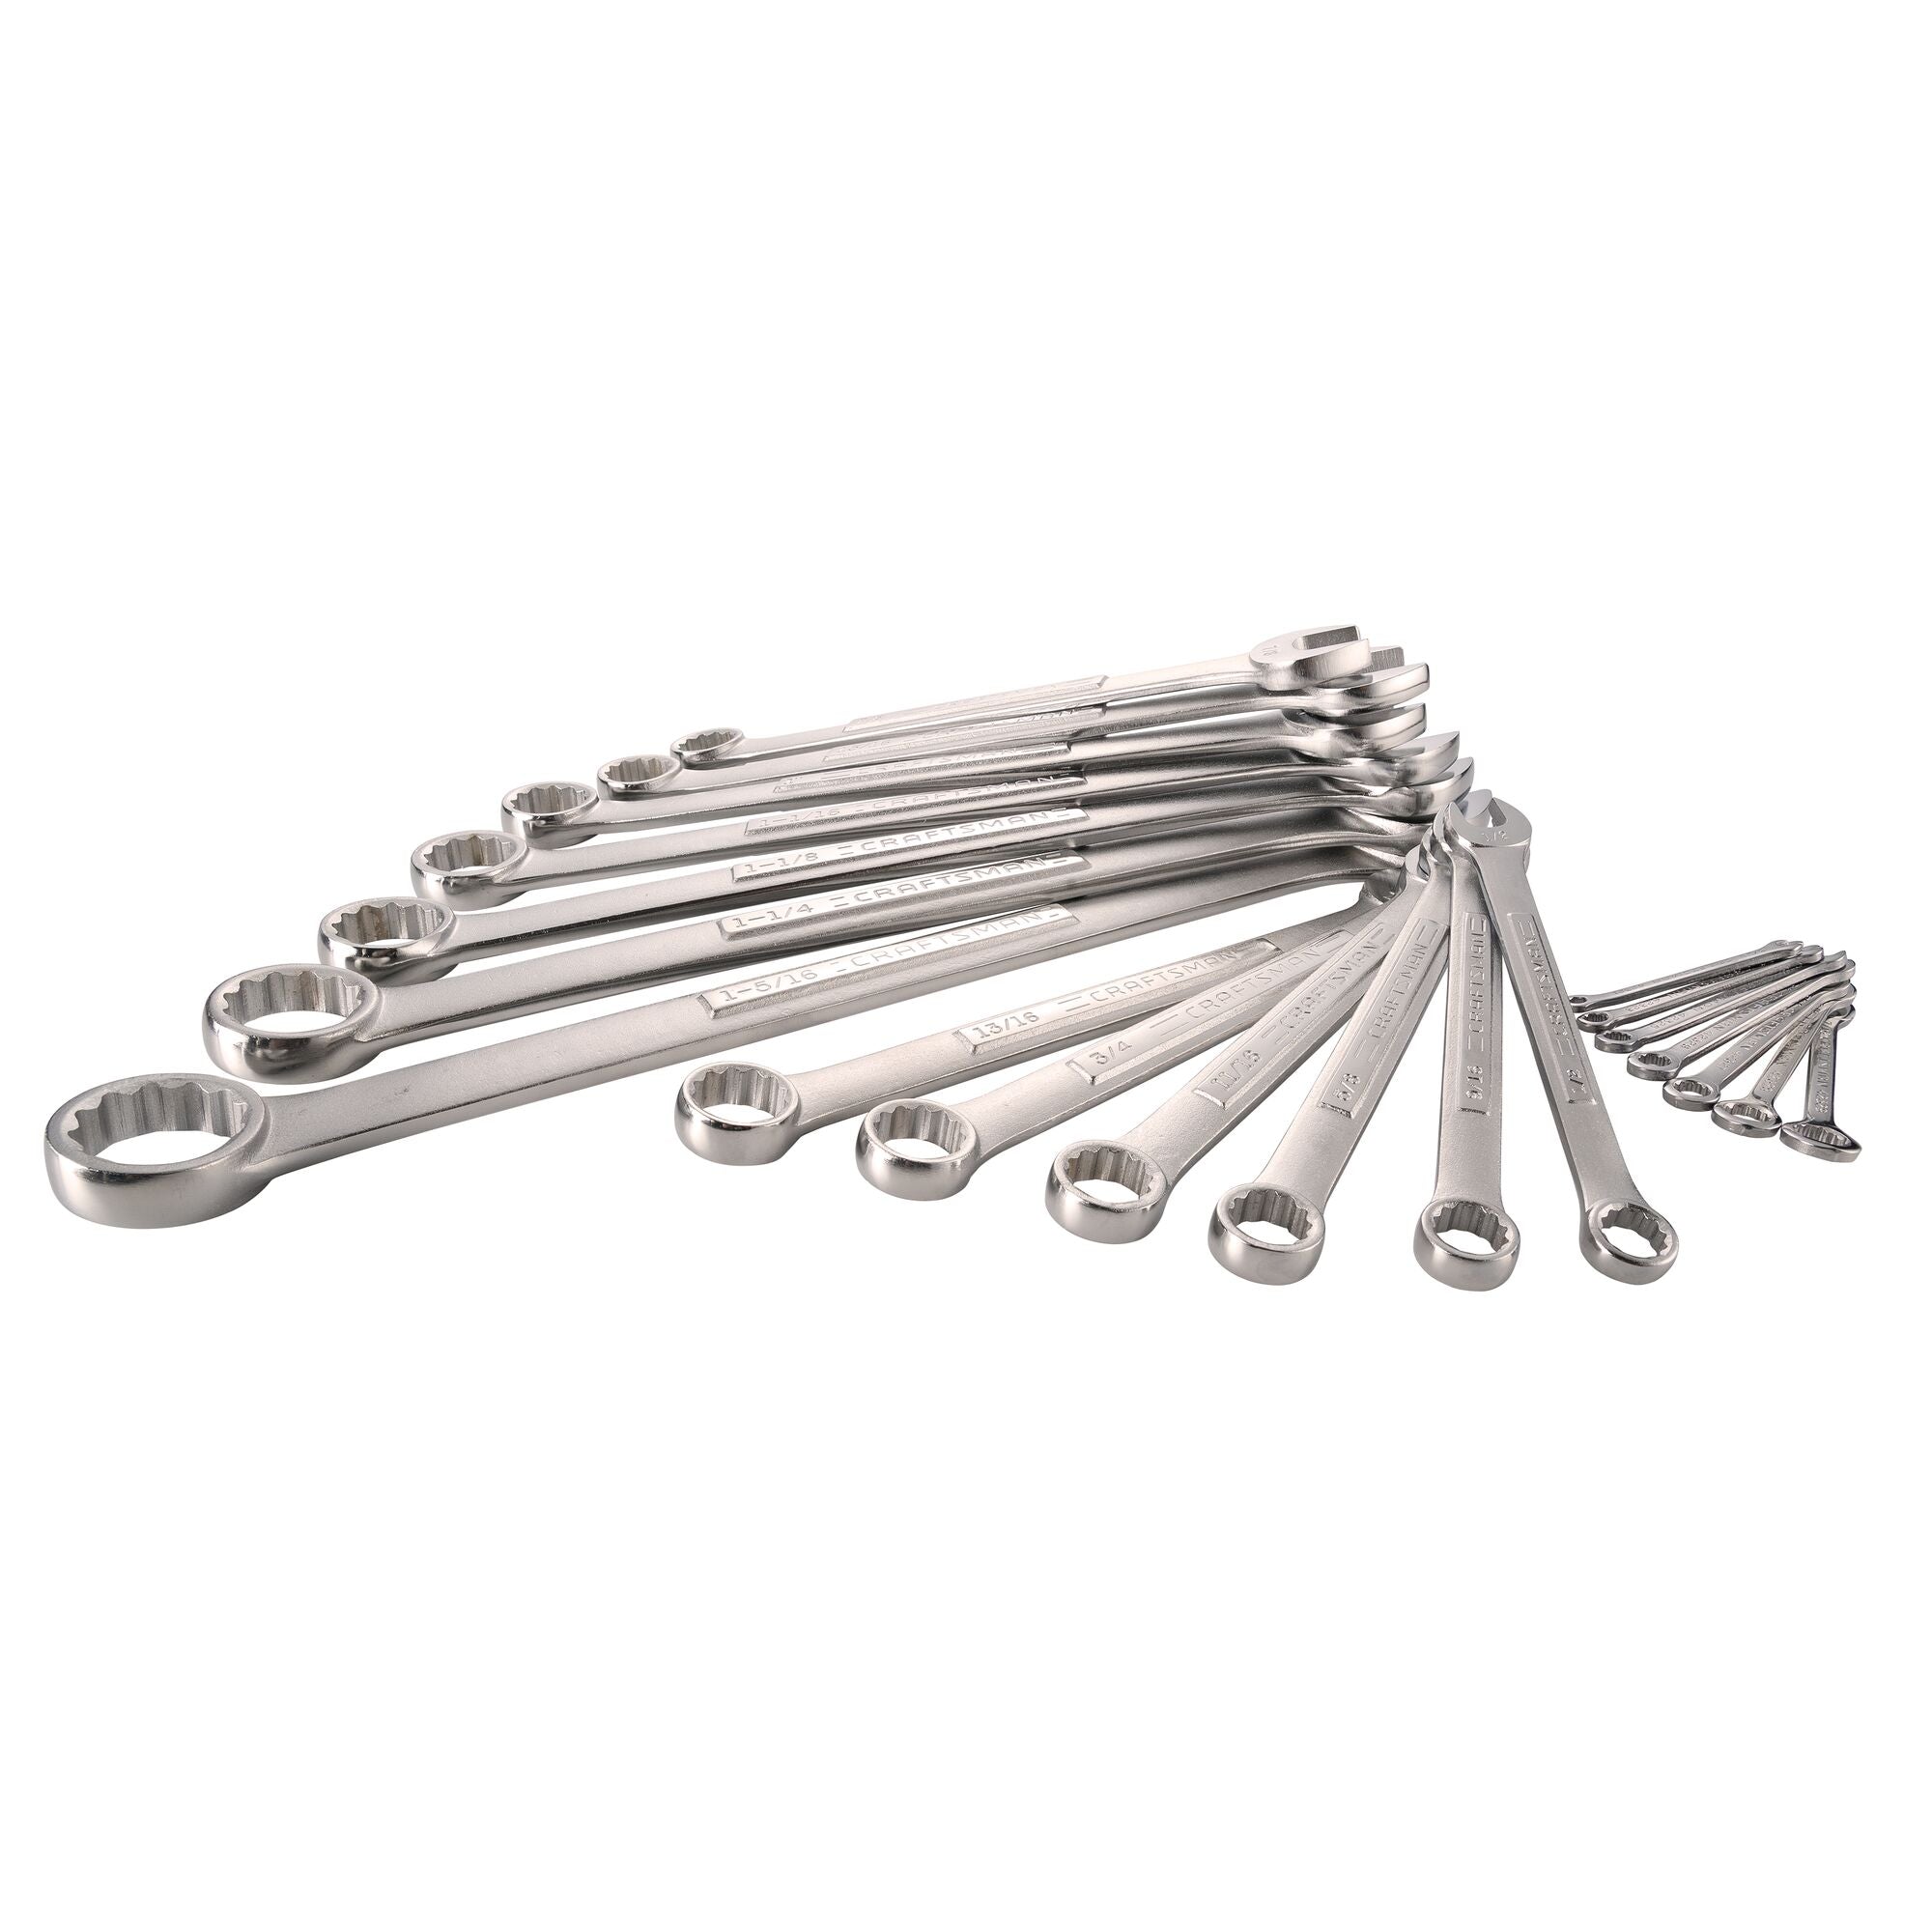 SAE Combination Wrench Set (20 pc) | CRAFTSMAN